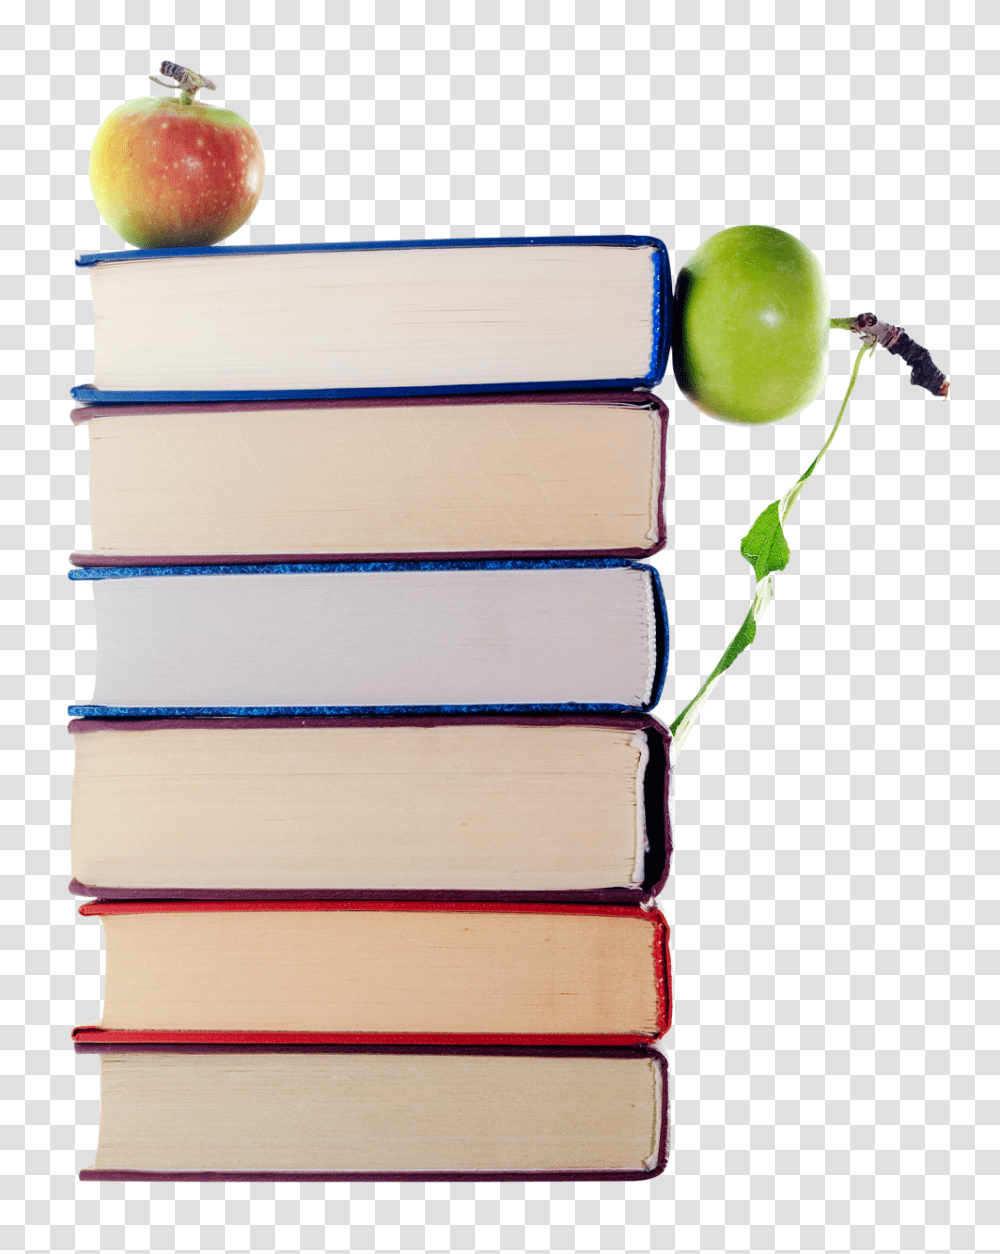 Green Apples In Stack Of Books Image, Plant, Fruit, Food, Novel Transparent Png